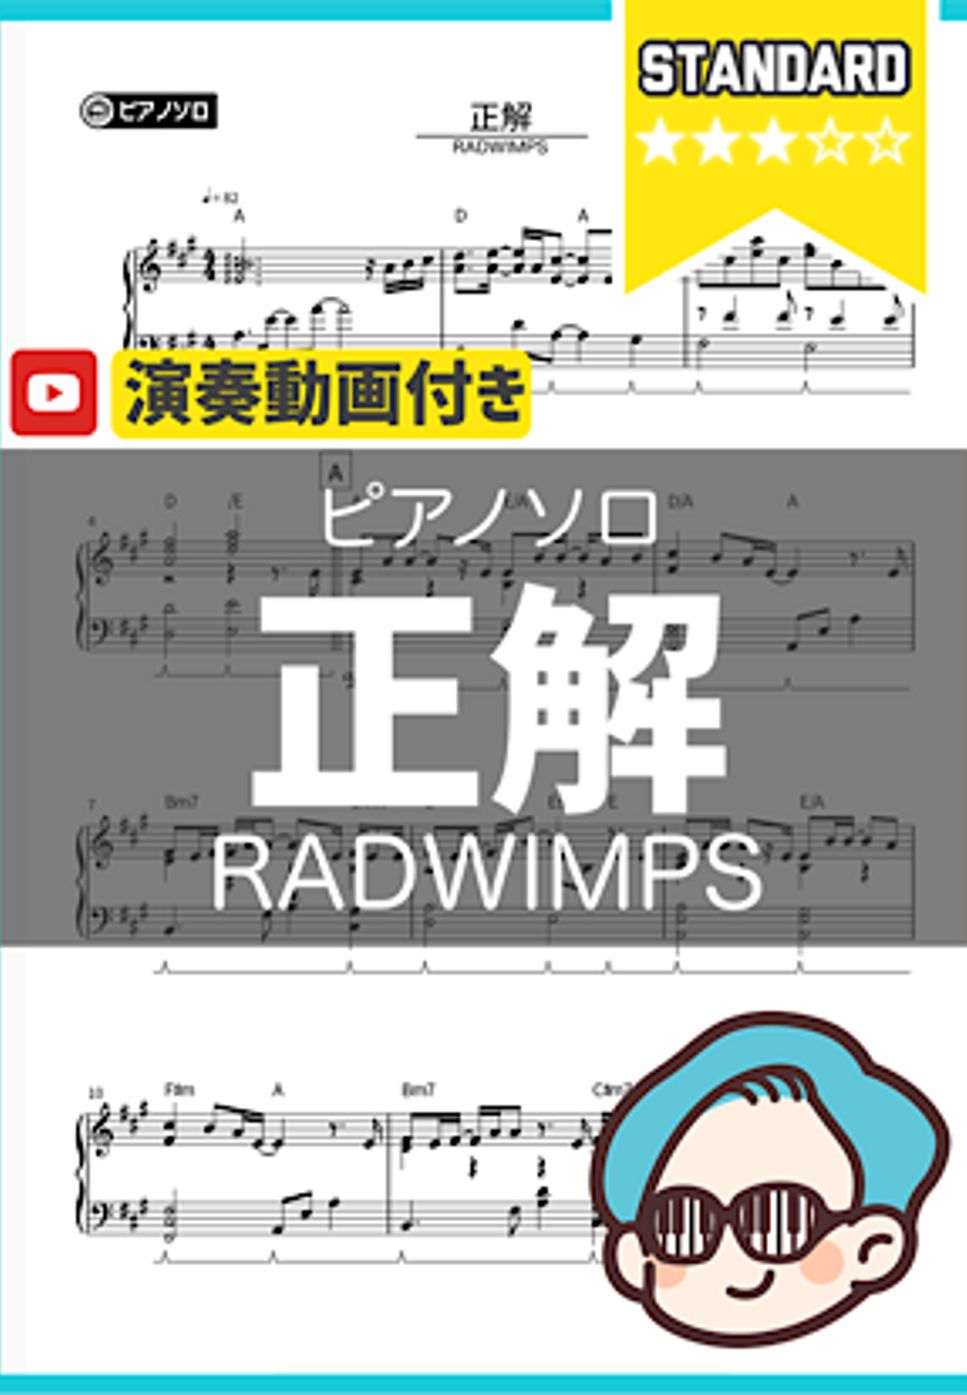 RADWIMPS - 正解 by THETA